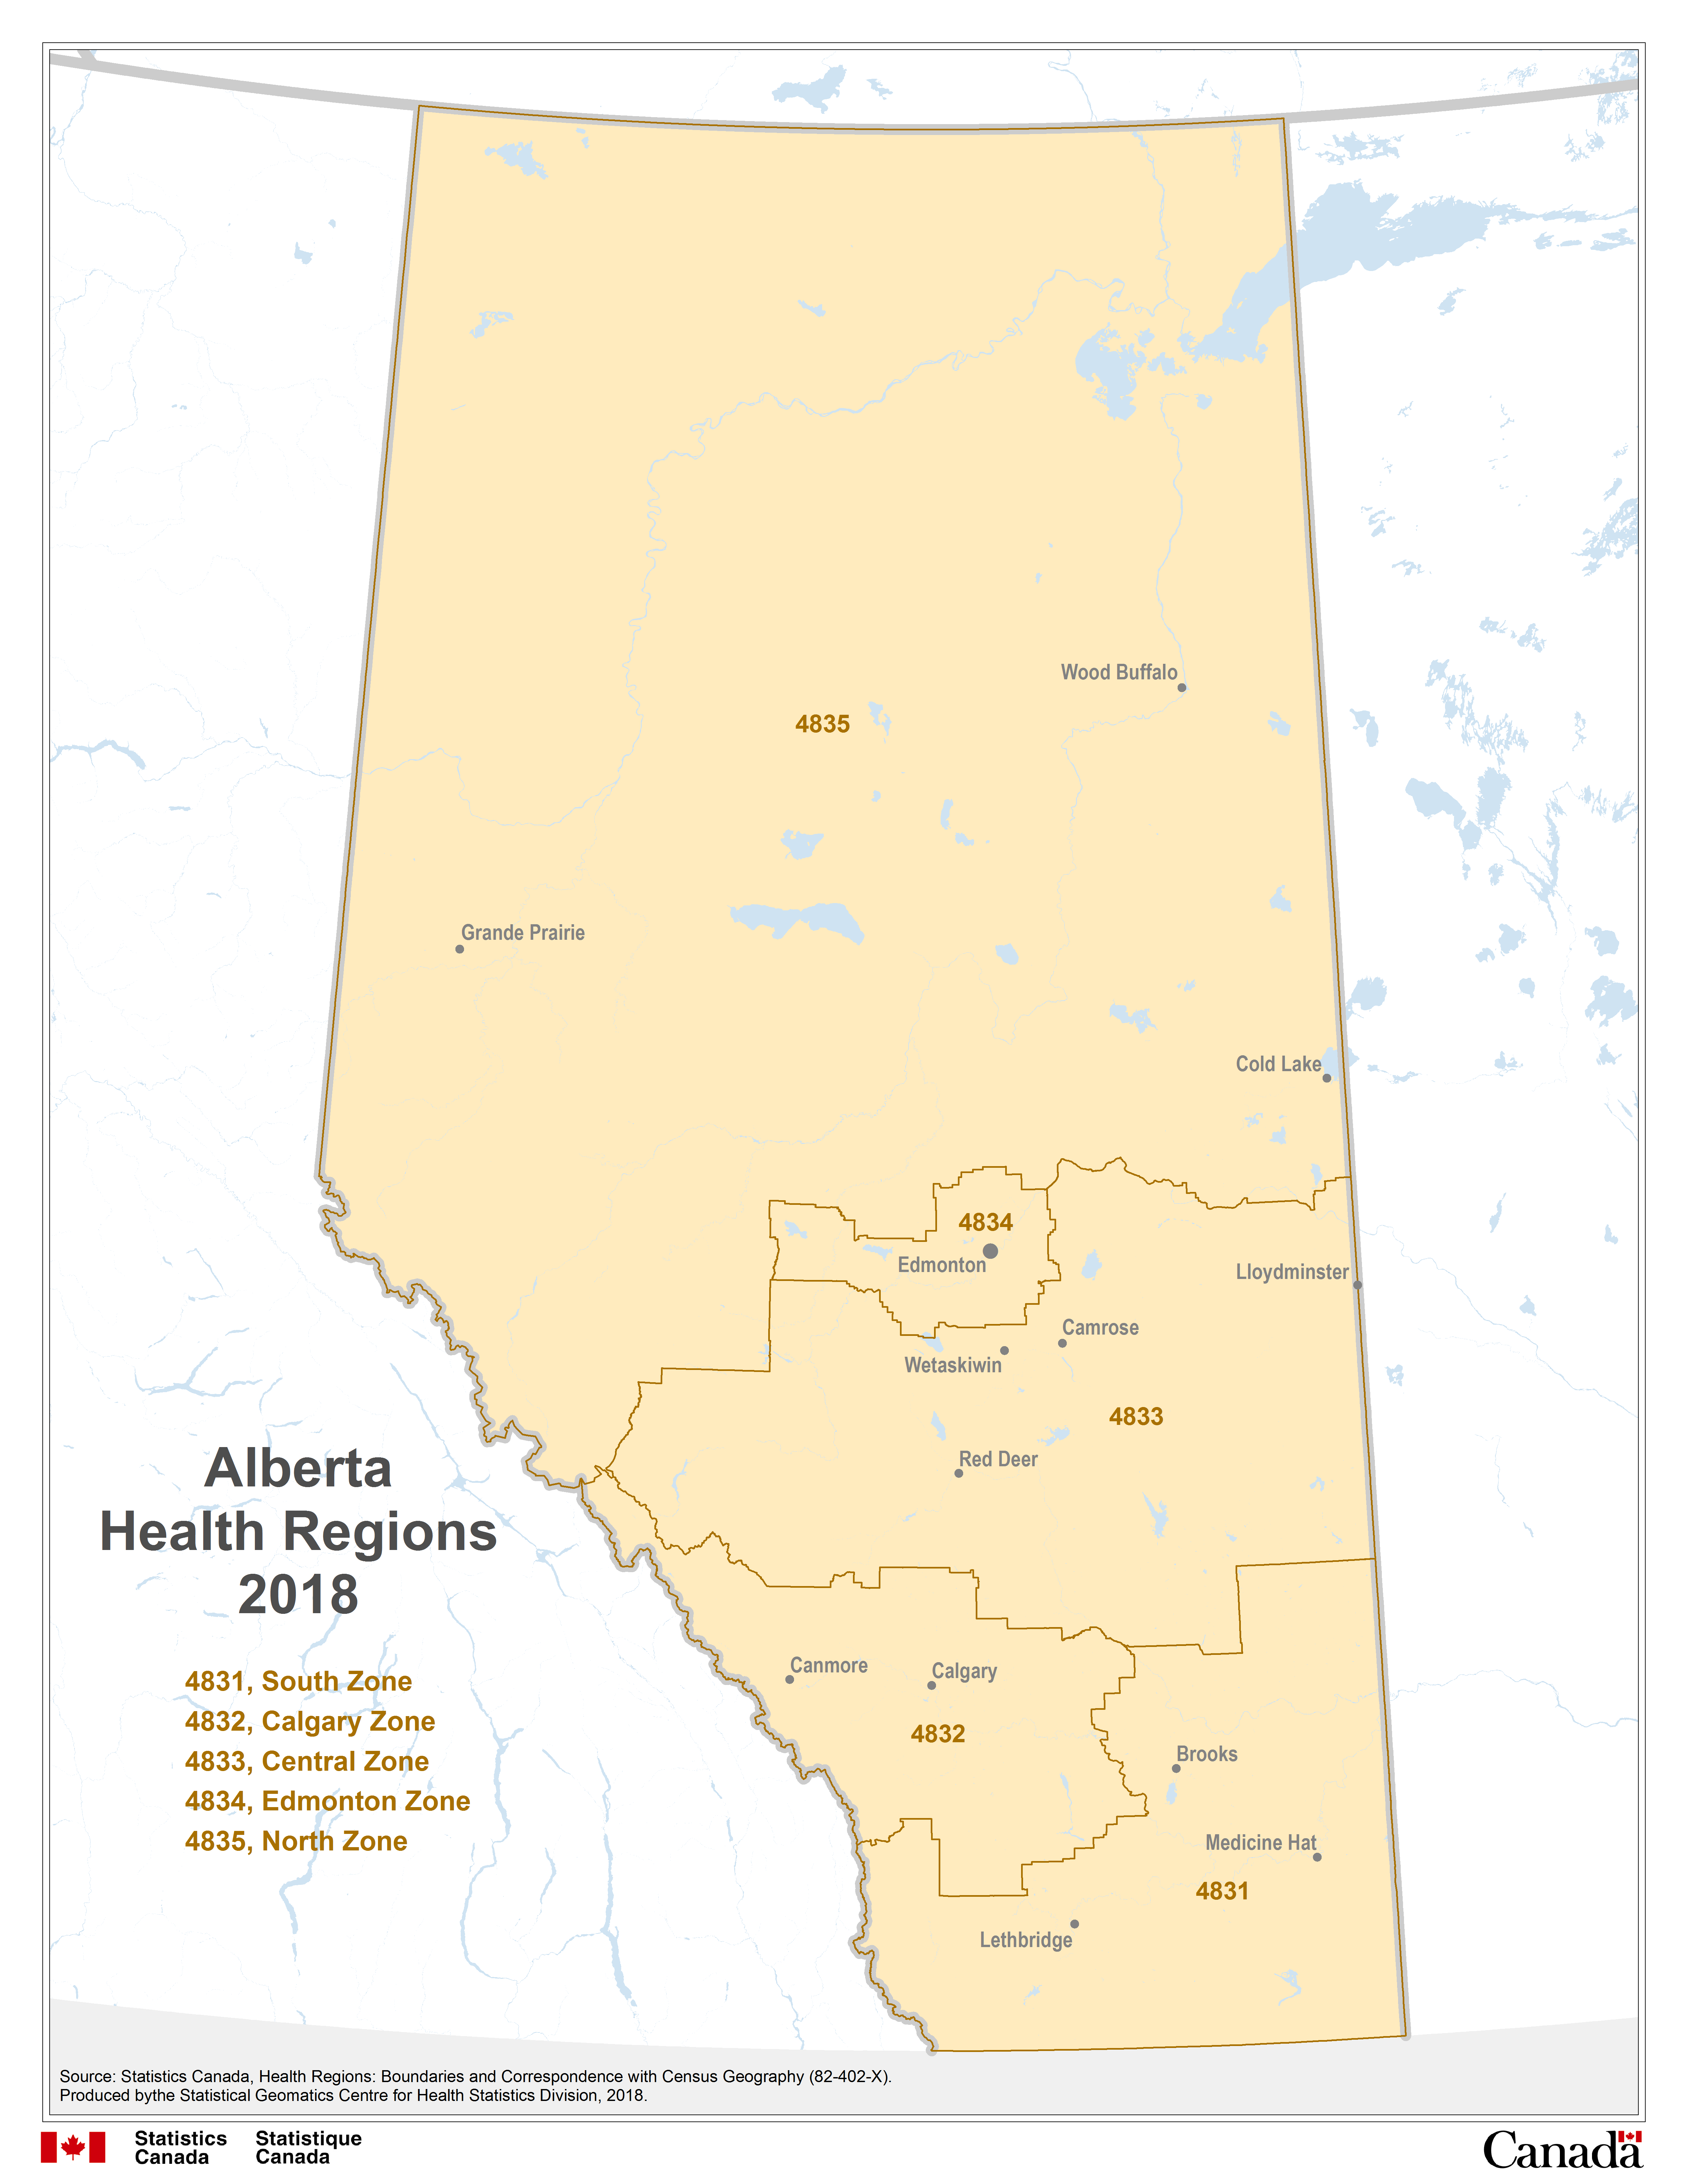 Map 11 Alberta Health Regions, 2018